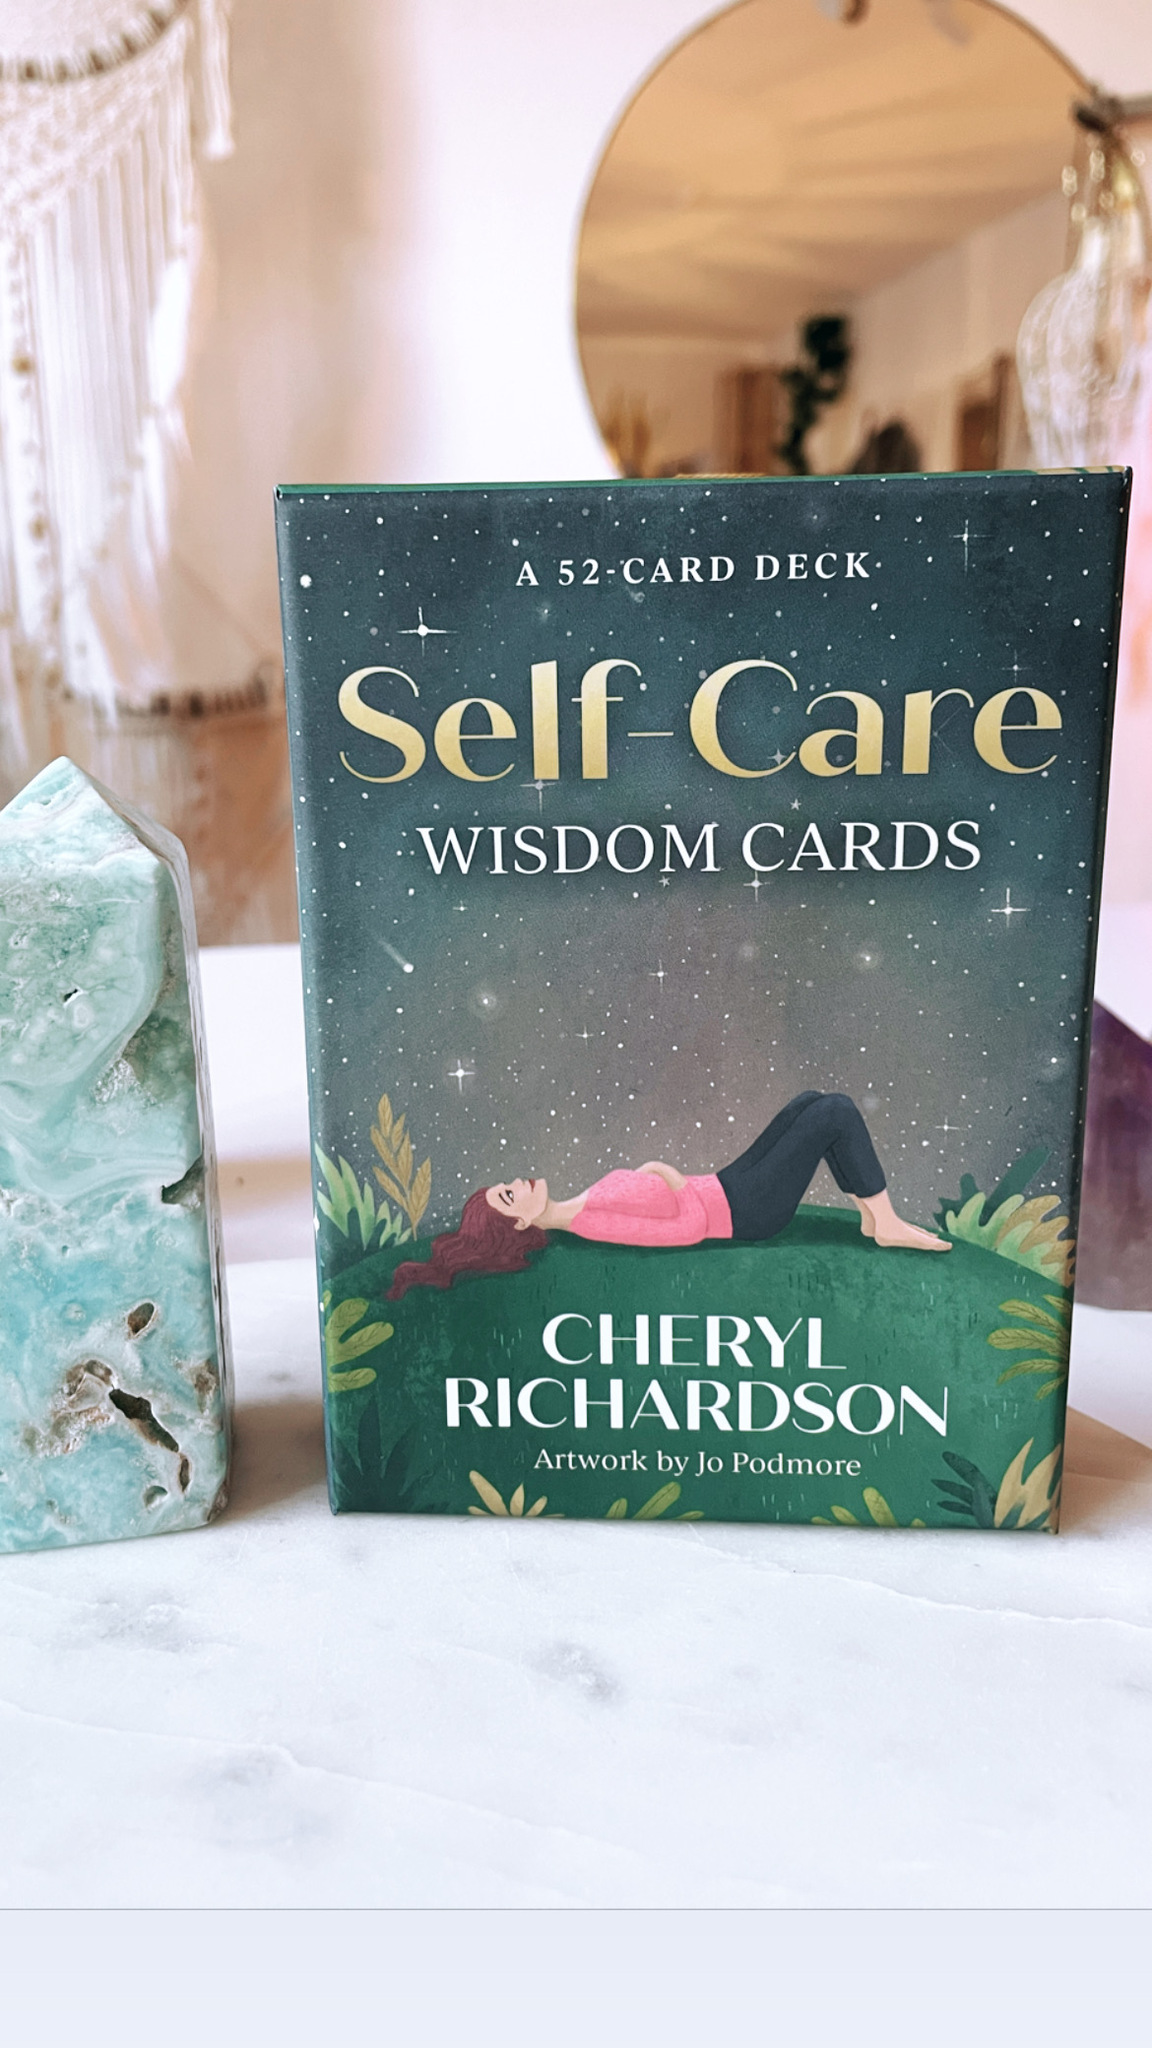 Self-Care, wisdom card